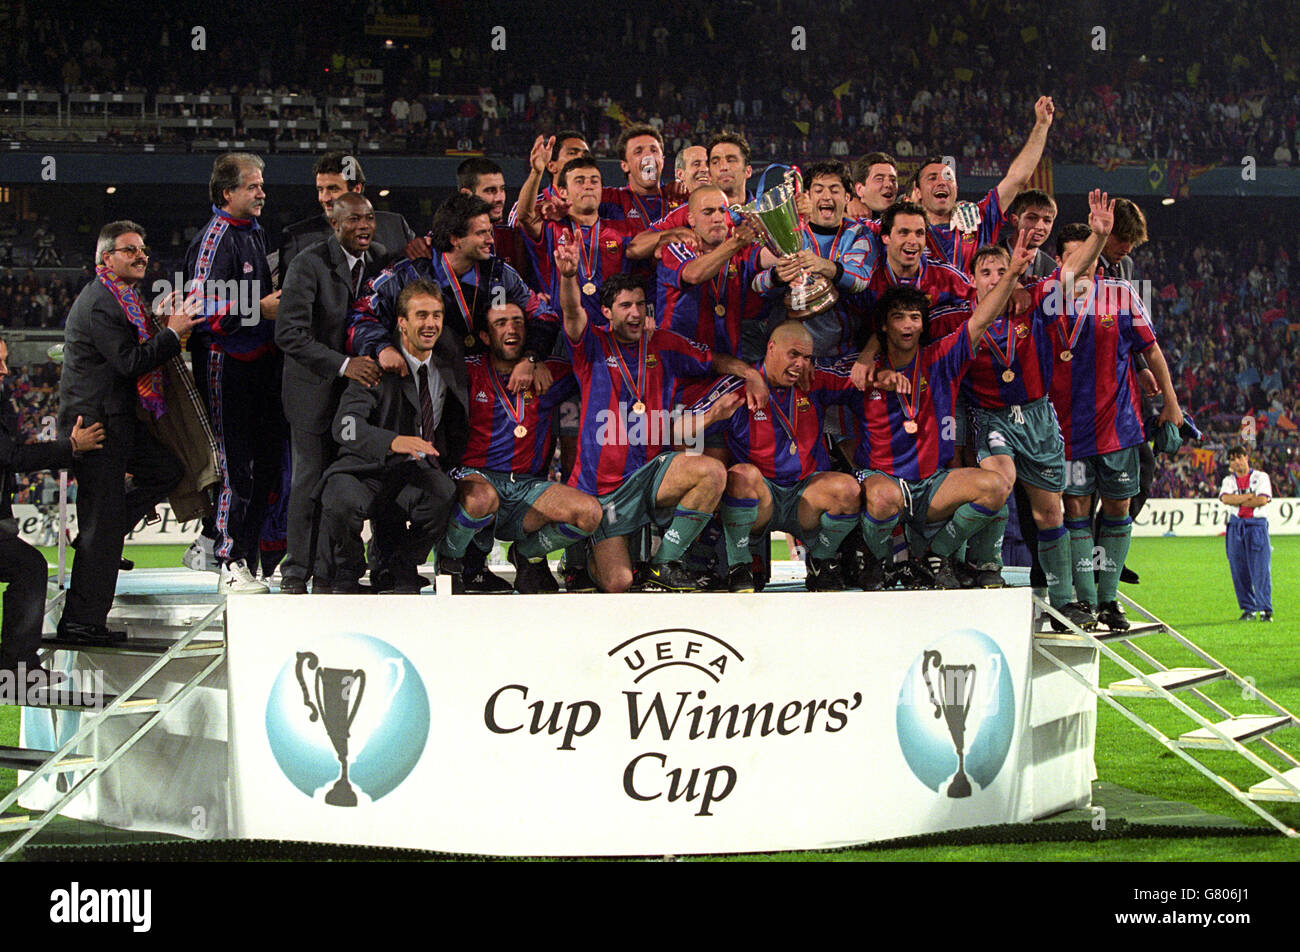 european cup winners